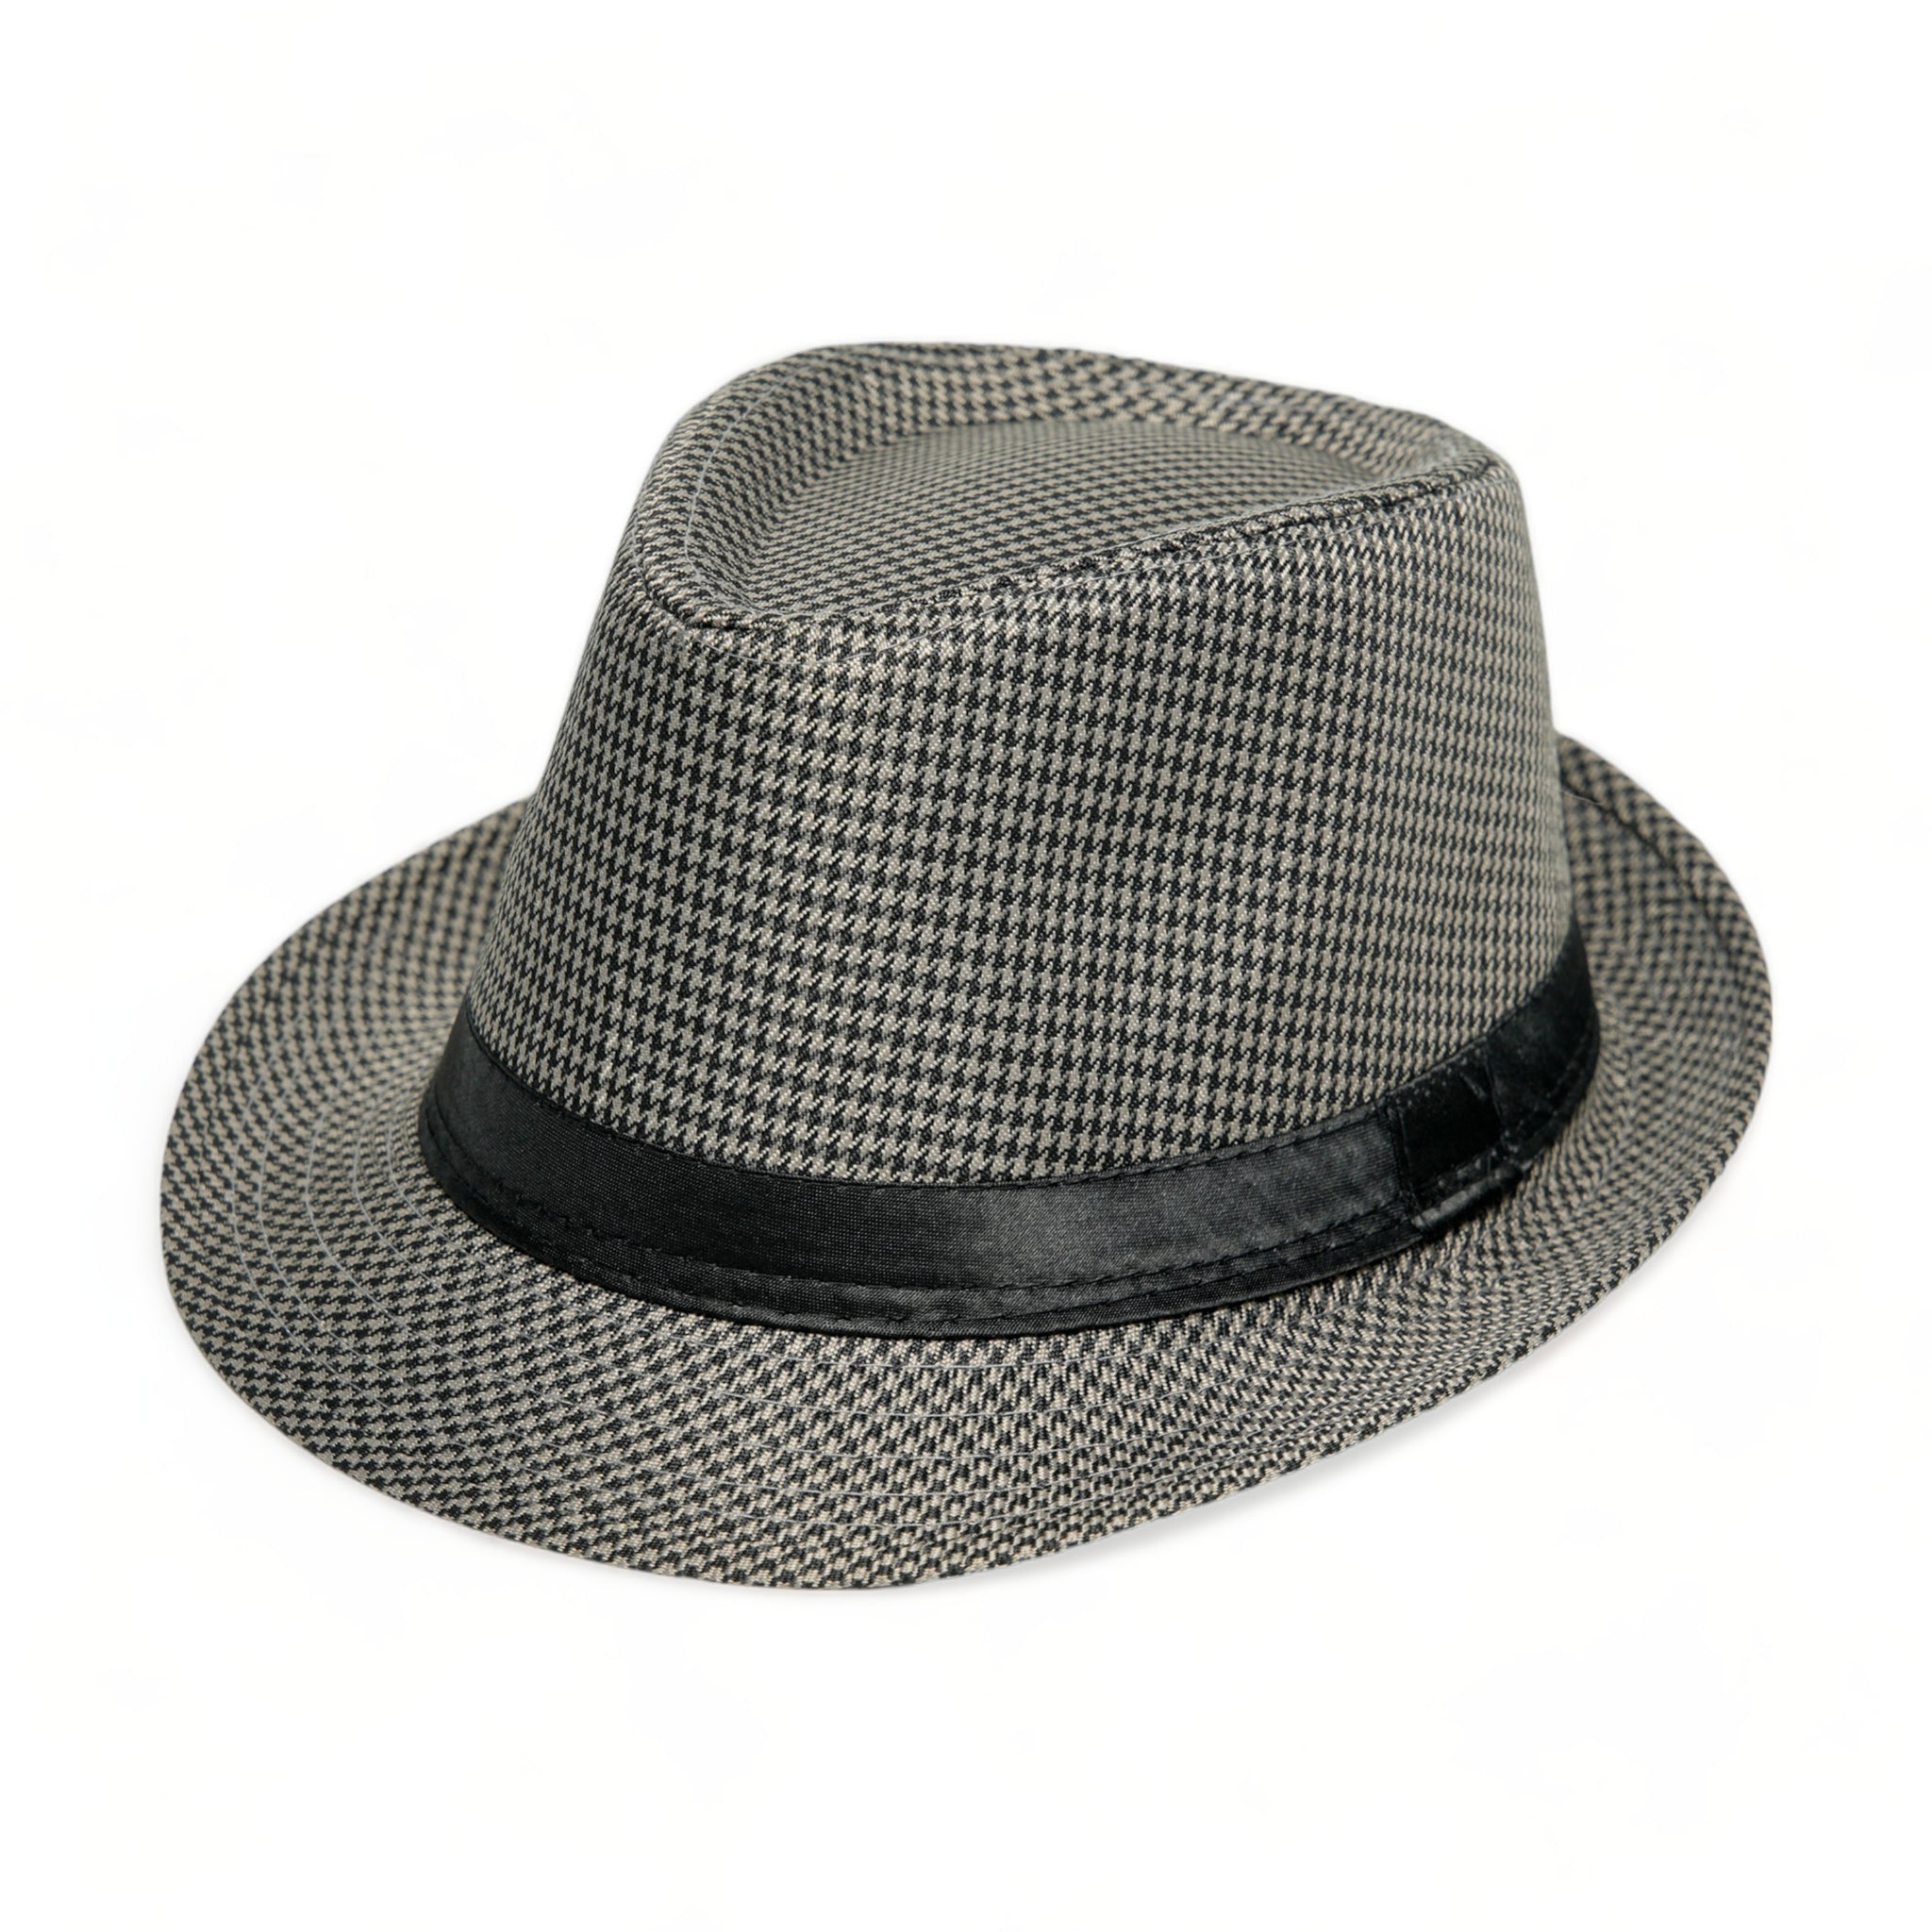 Chokore Fedora Hat in Houndstooth Pattern (Gray)